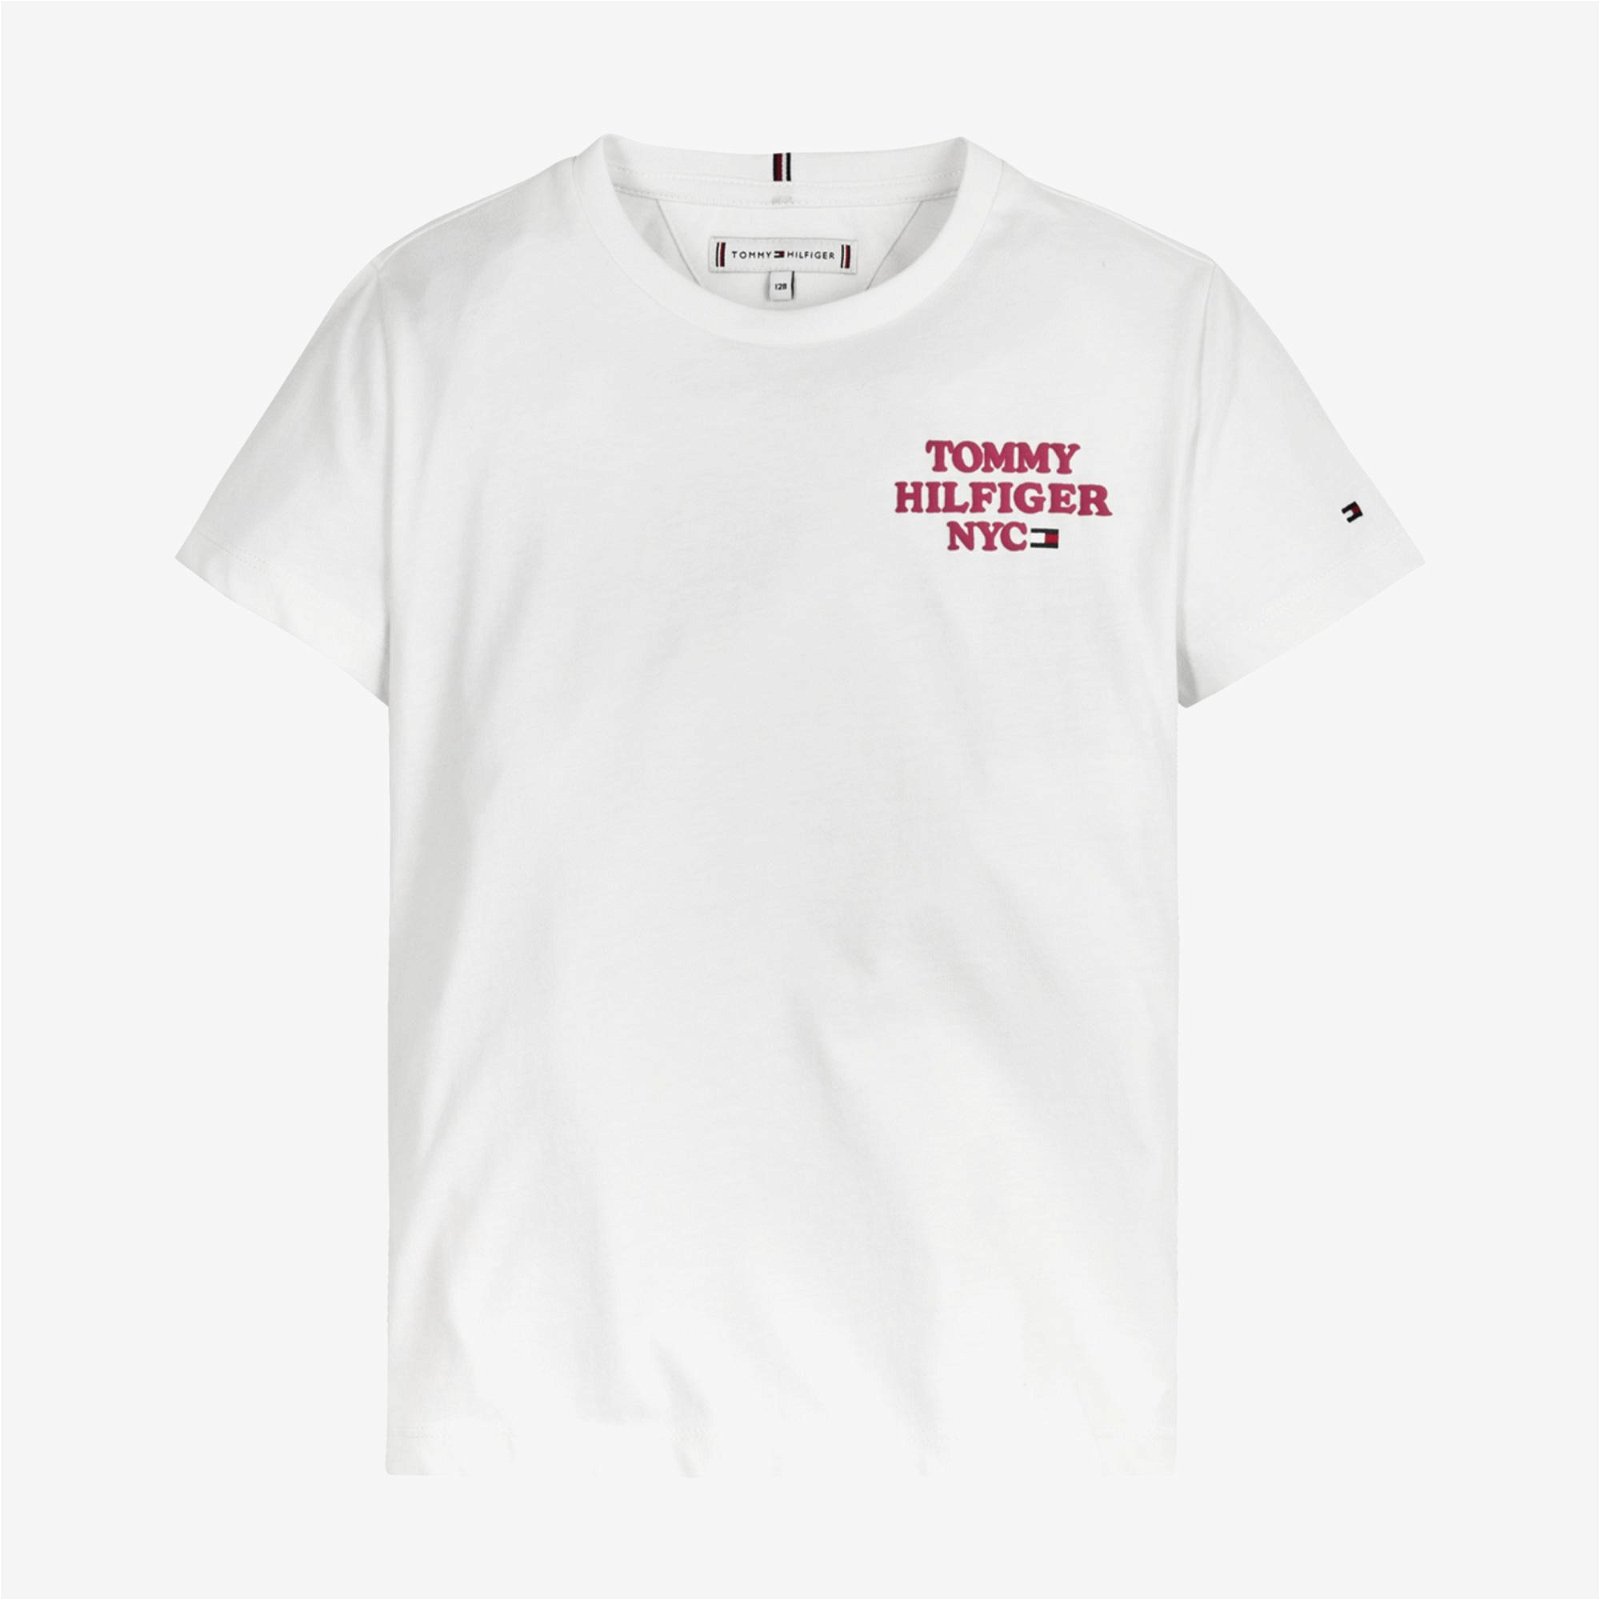 Tommy Hilfiger Nyc Graphic Çocuk Beyaz T-Shirt